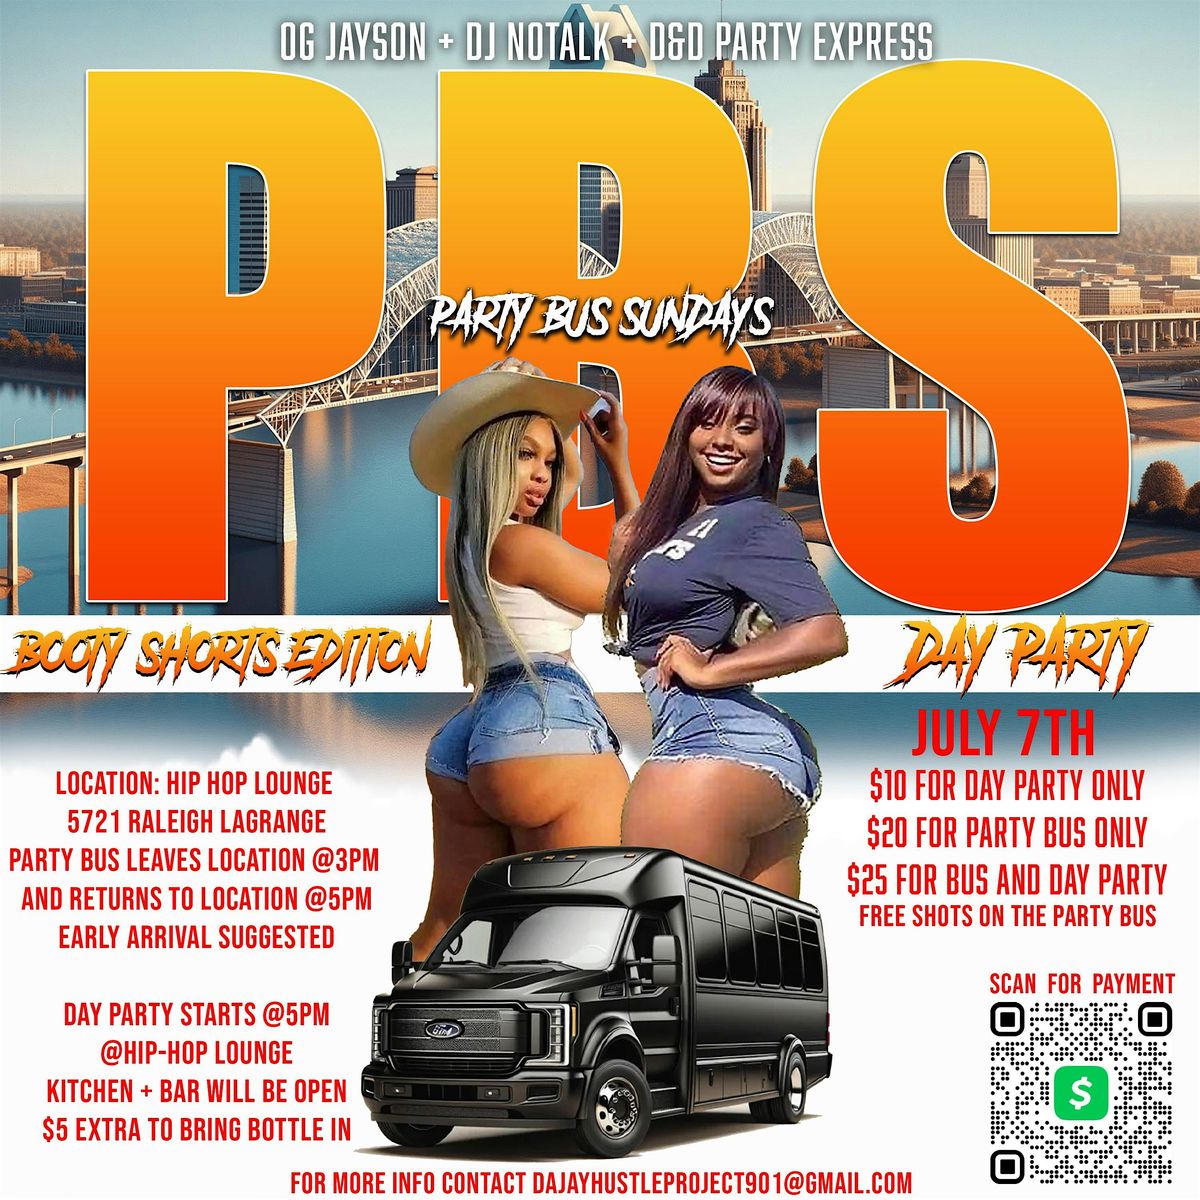 PBS "Party Bus Sundays"